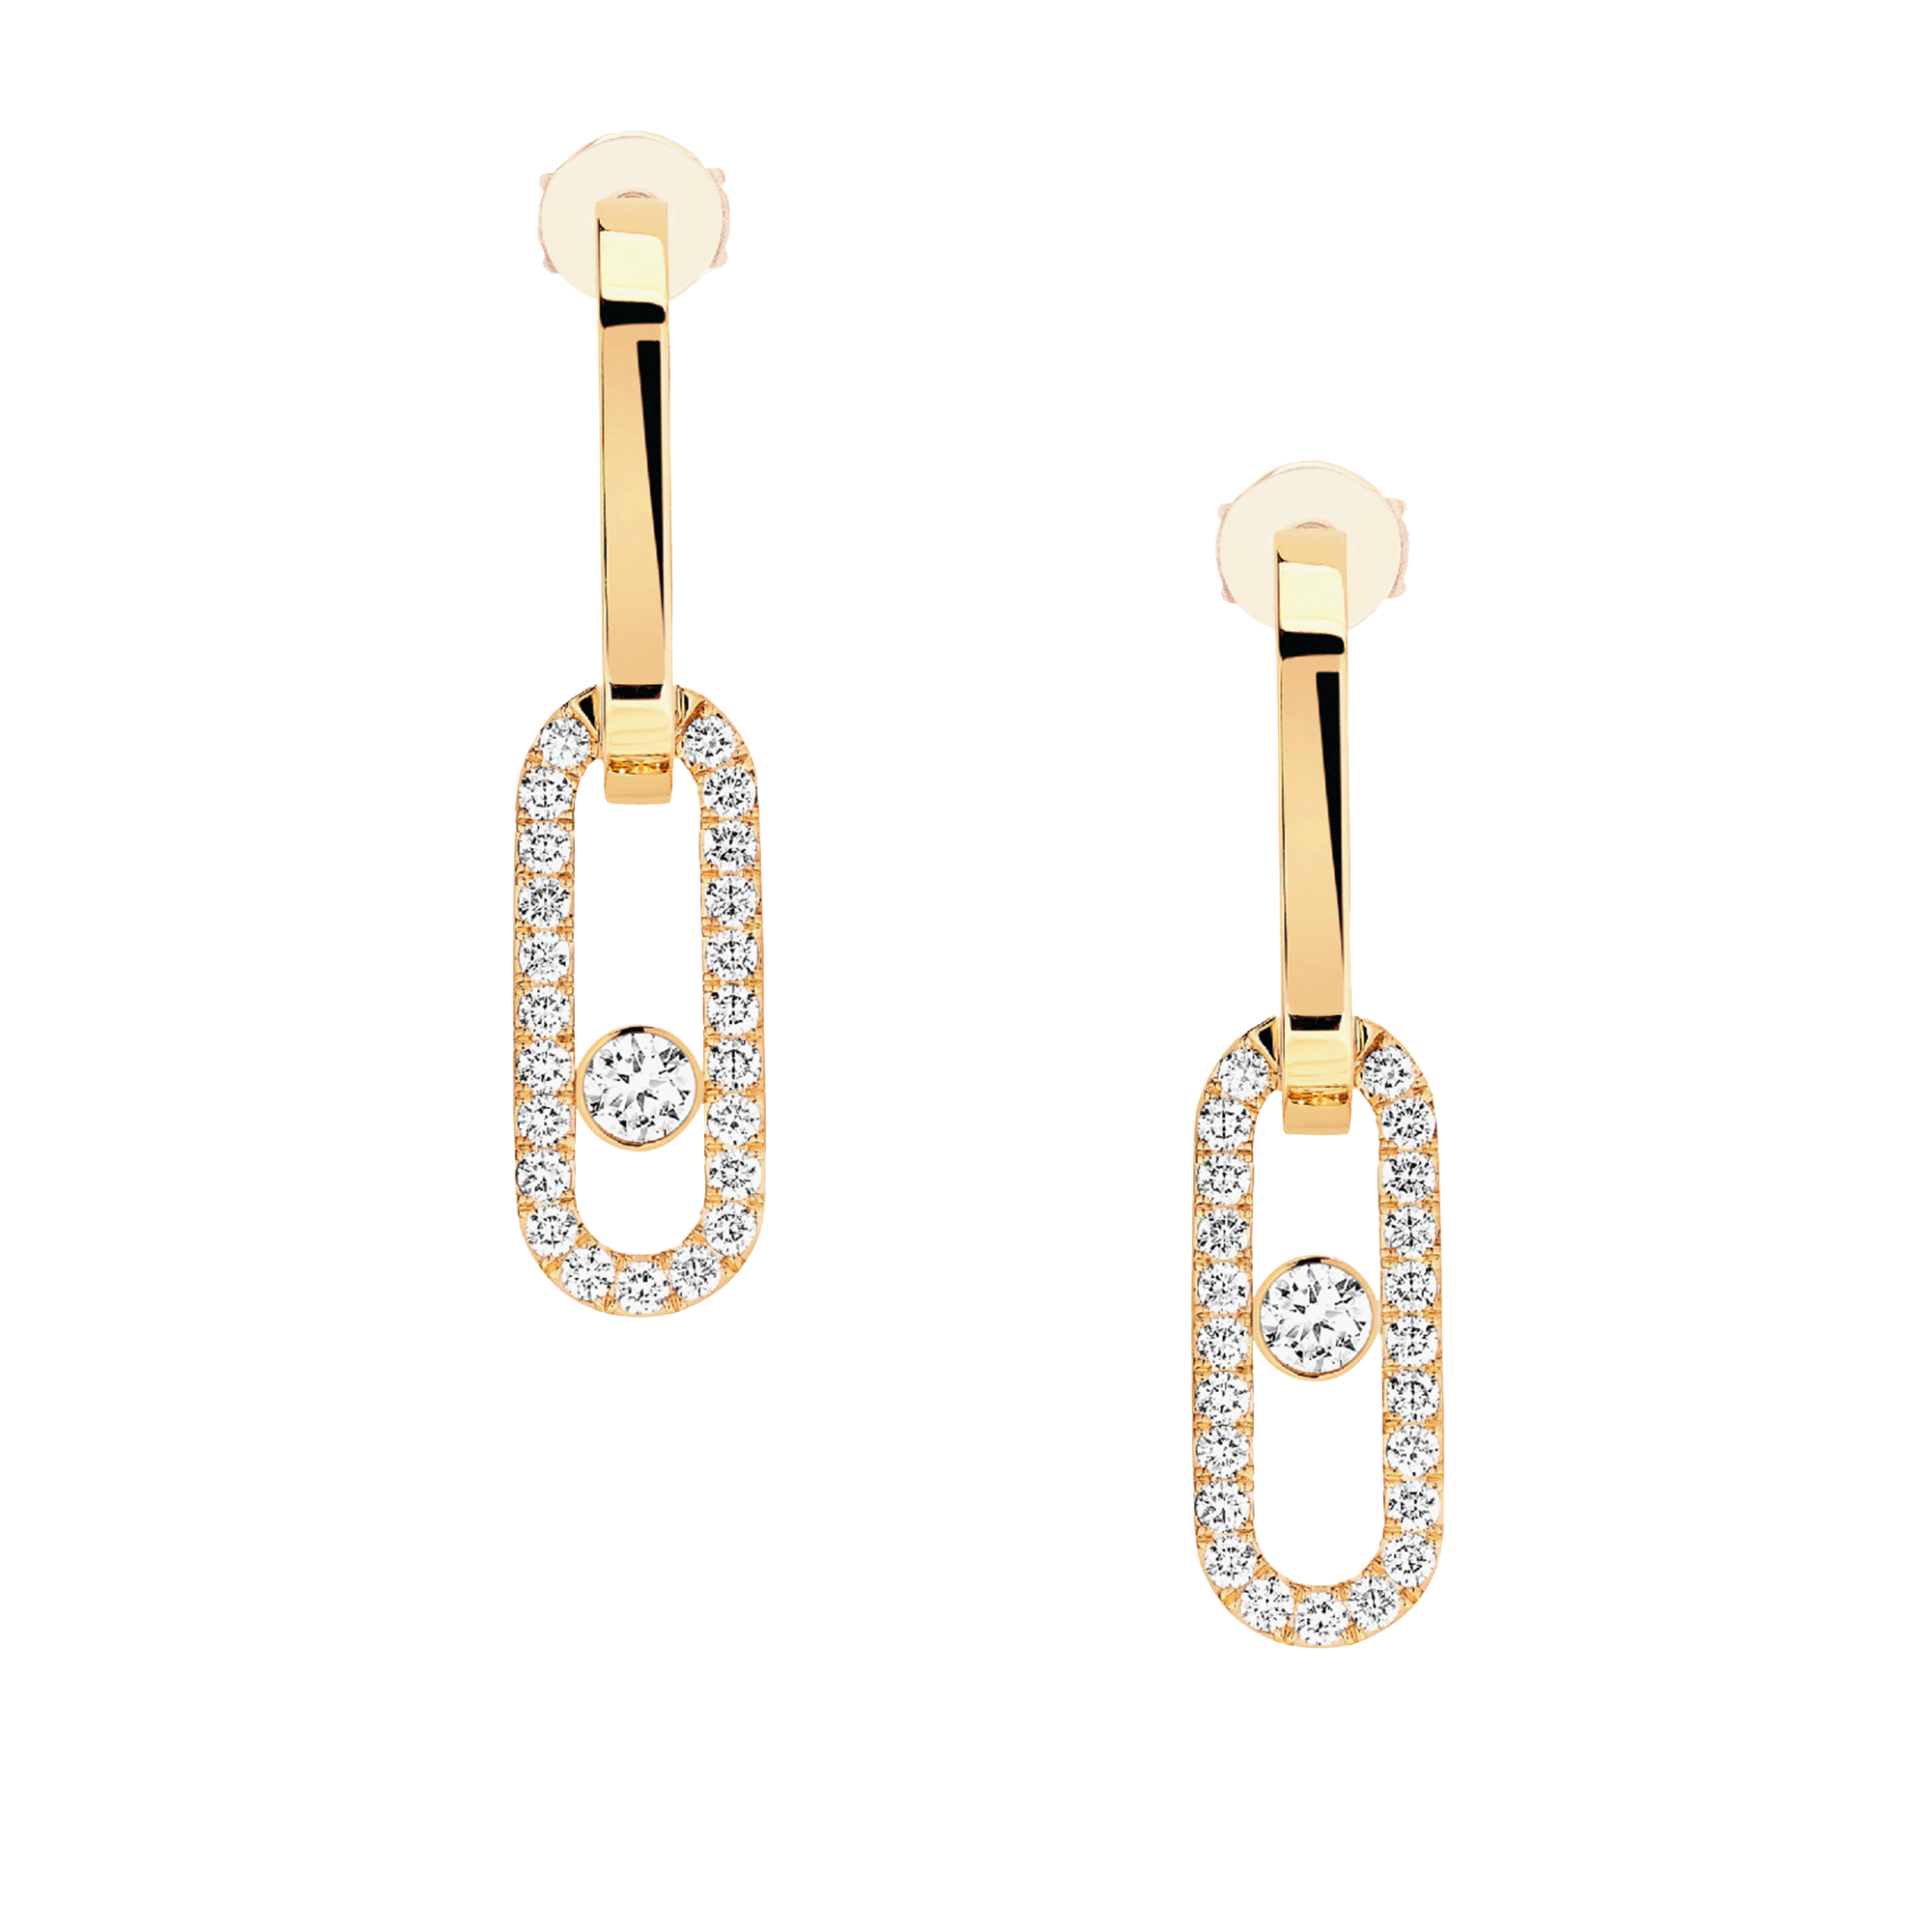 Move Link 18ct Yellow Gold Diamond Drop Earrings